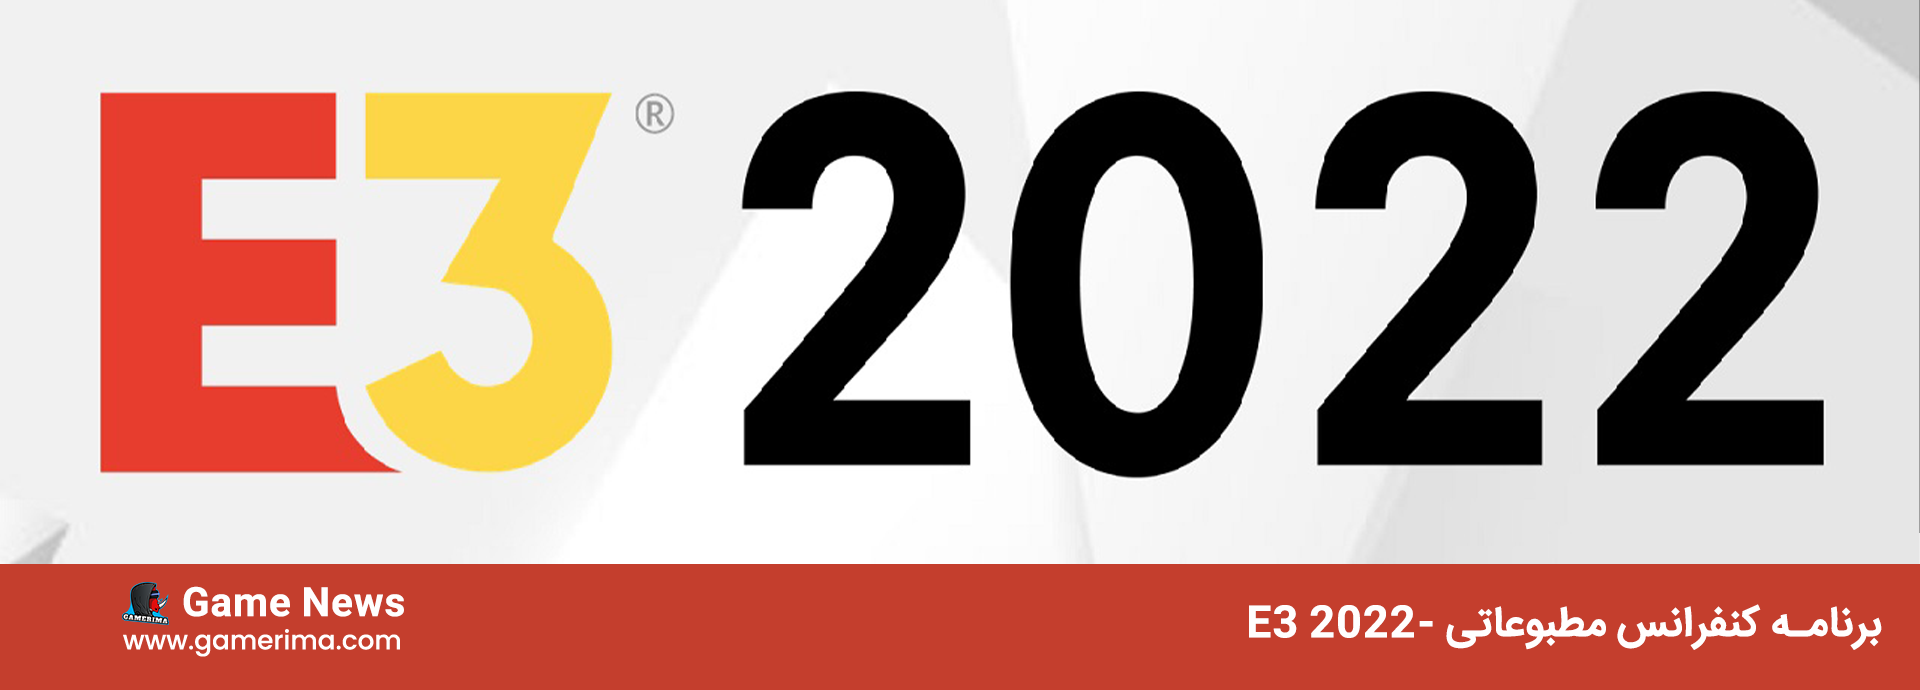 برنامه کنفرانس مطبوعاتی -E3 2022